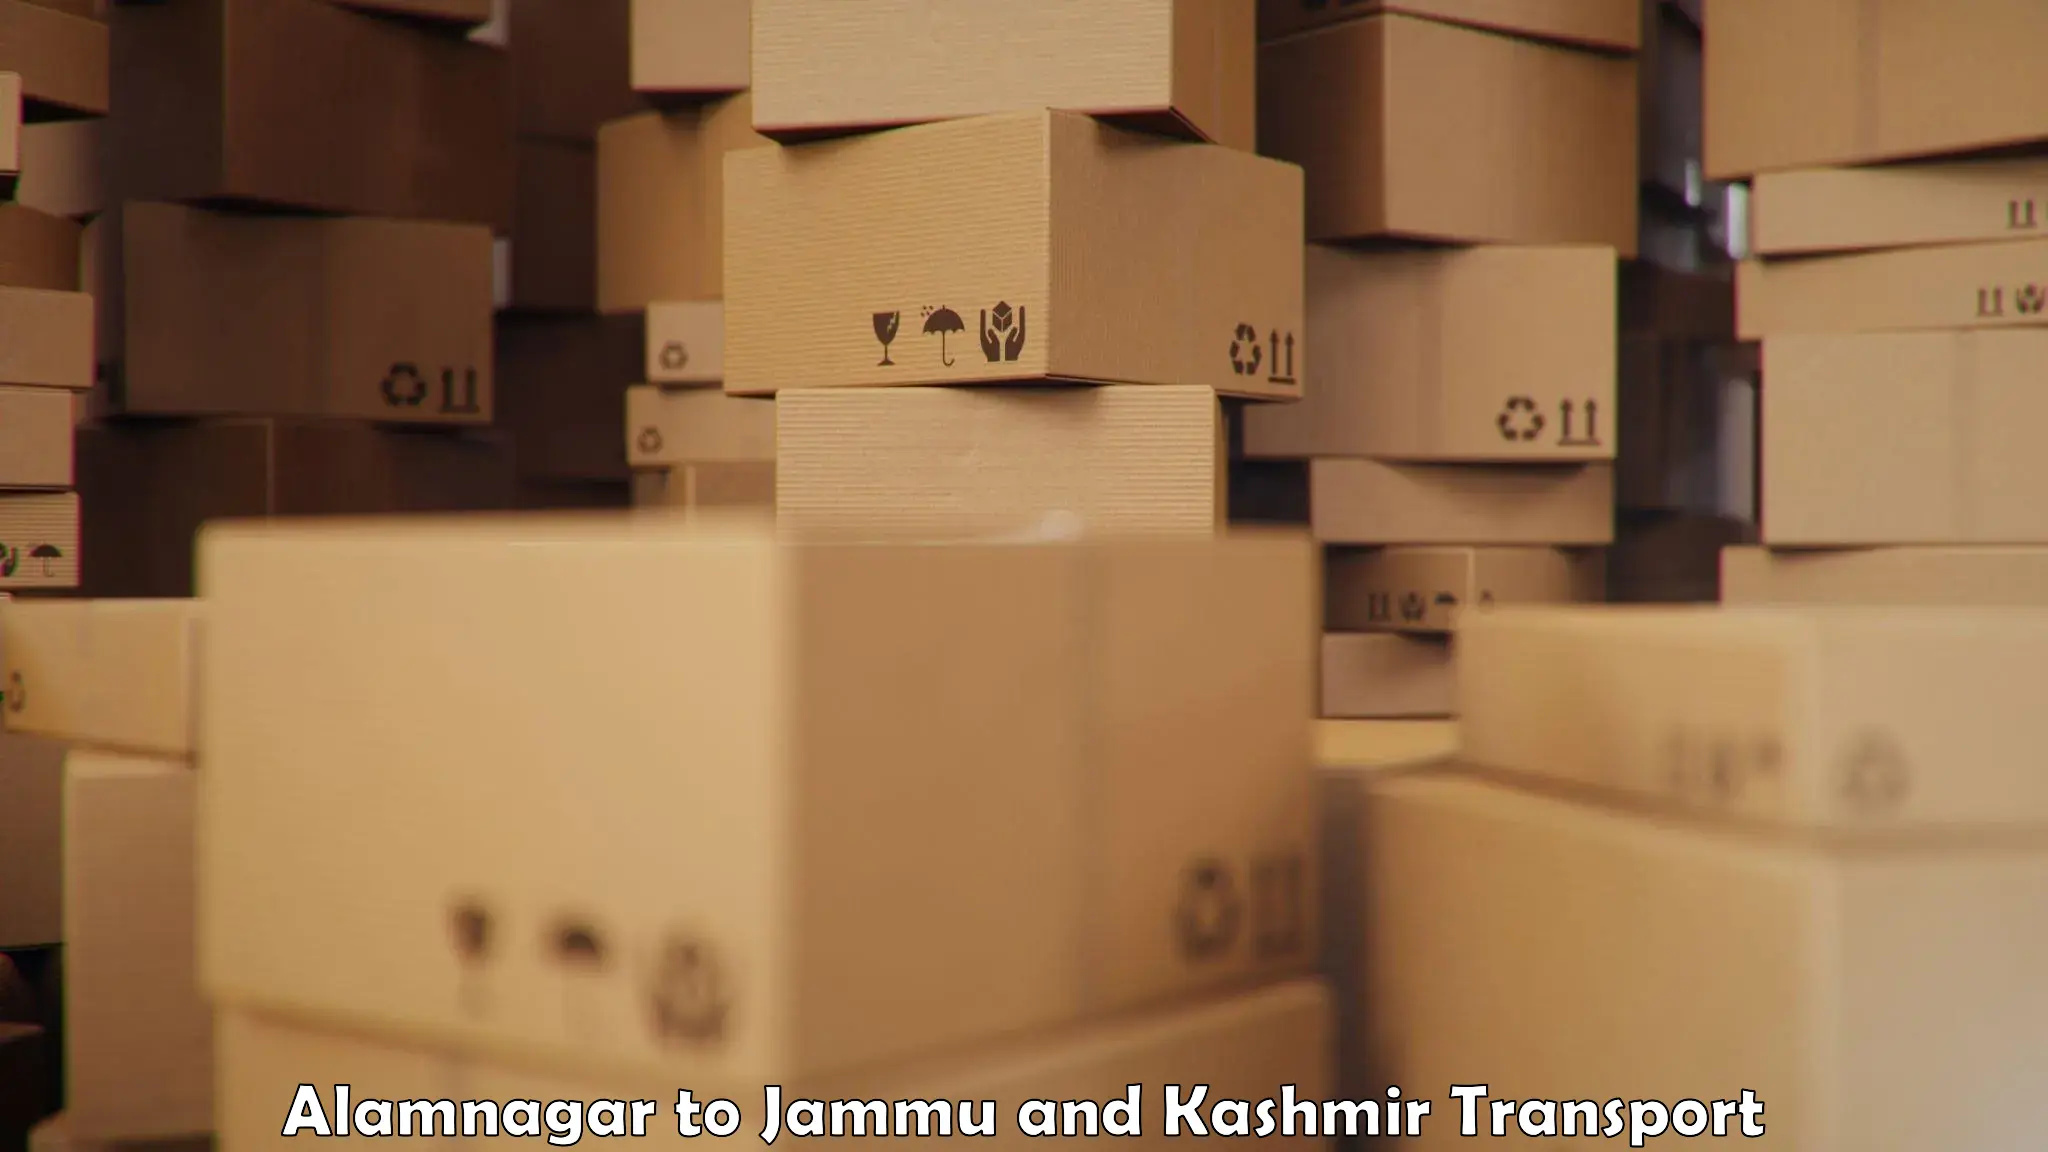 Truck transport companies in India Alamnagar to Kargil